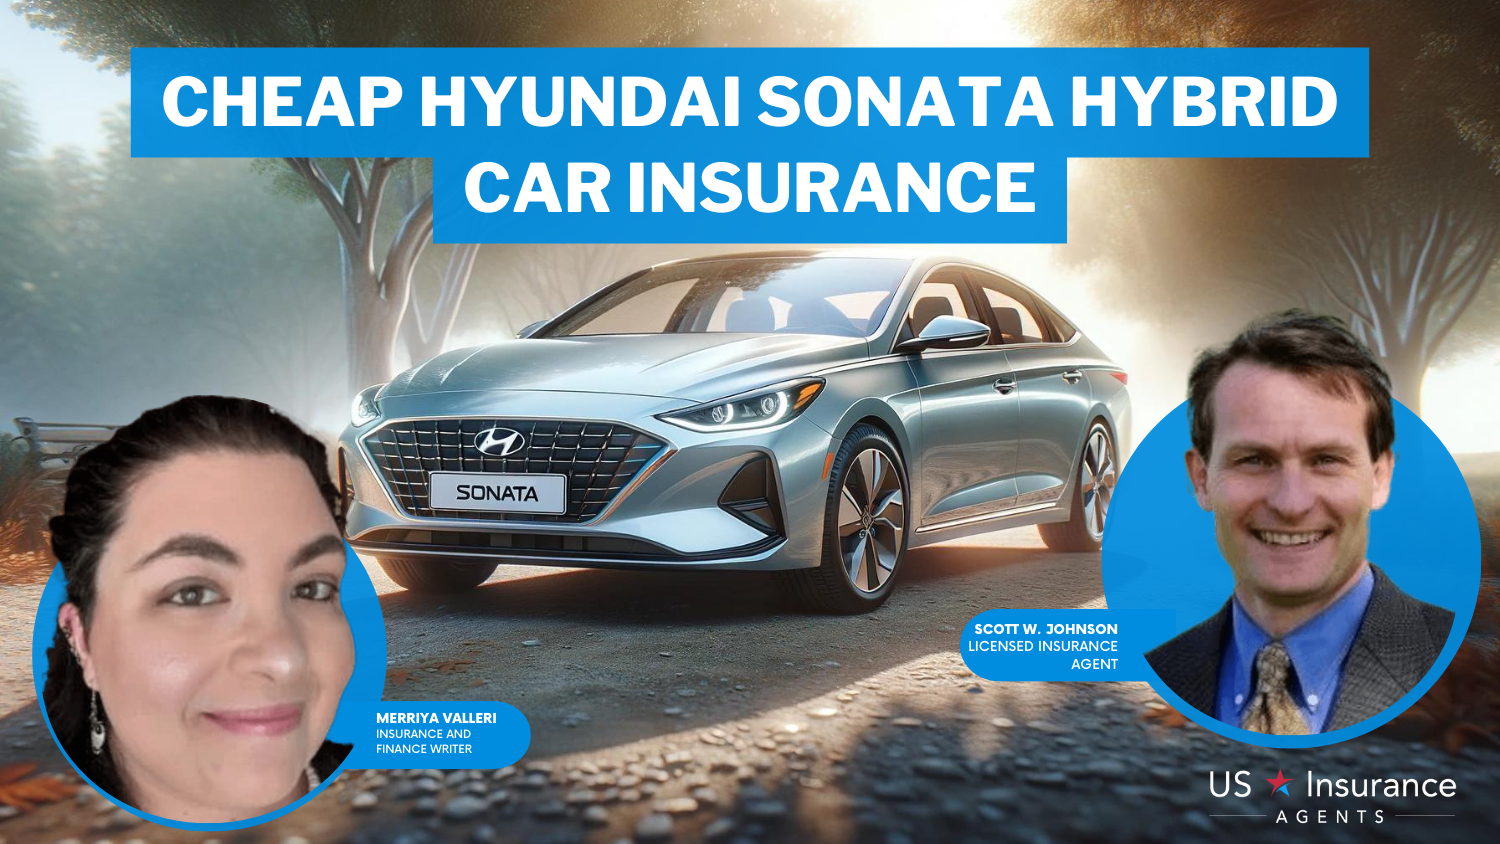 Cheap Hyundai Sonata Hybrid Car Insurance: State Farm, Progressive, and Liberty Mutual